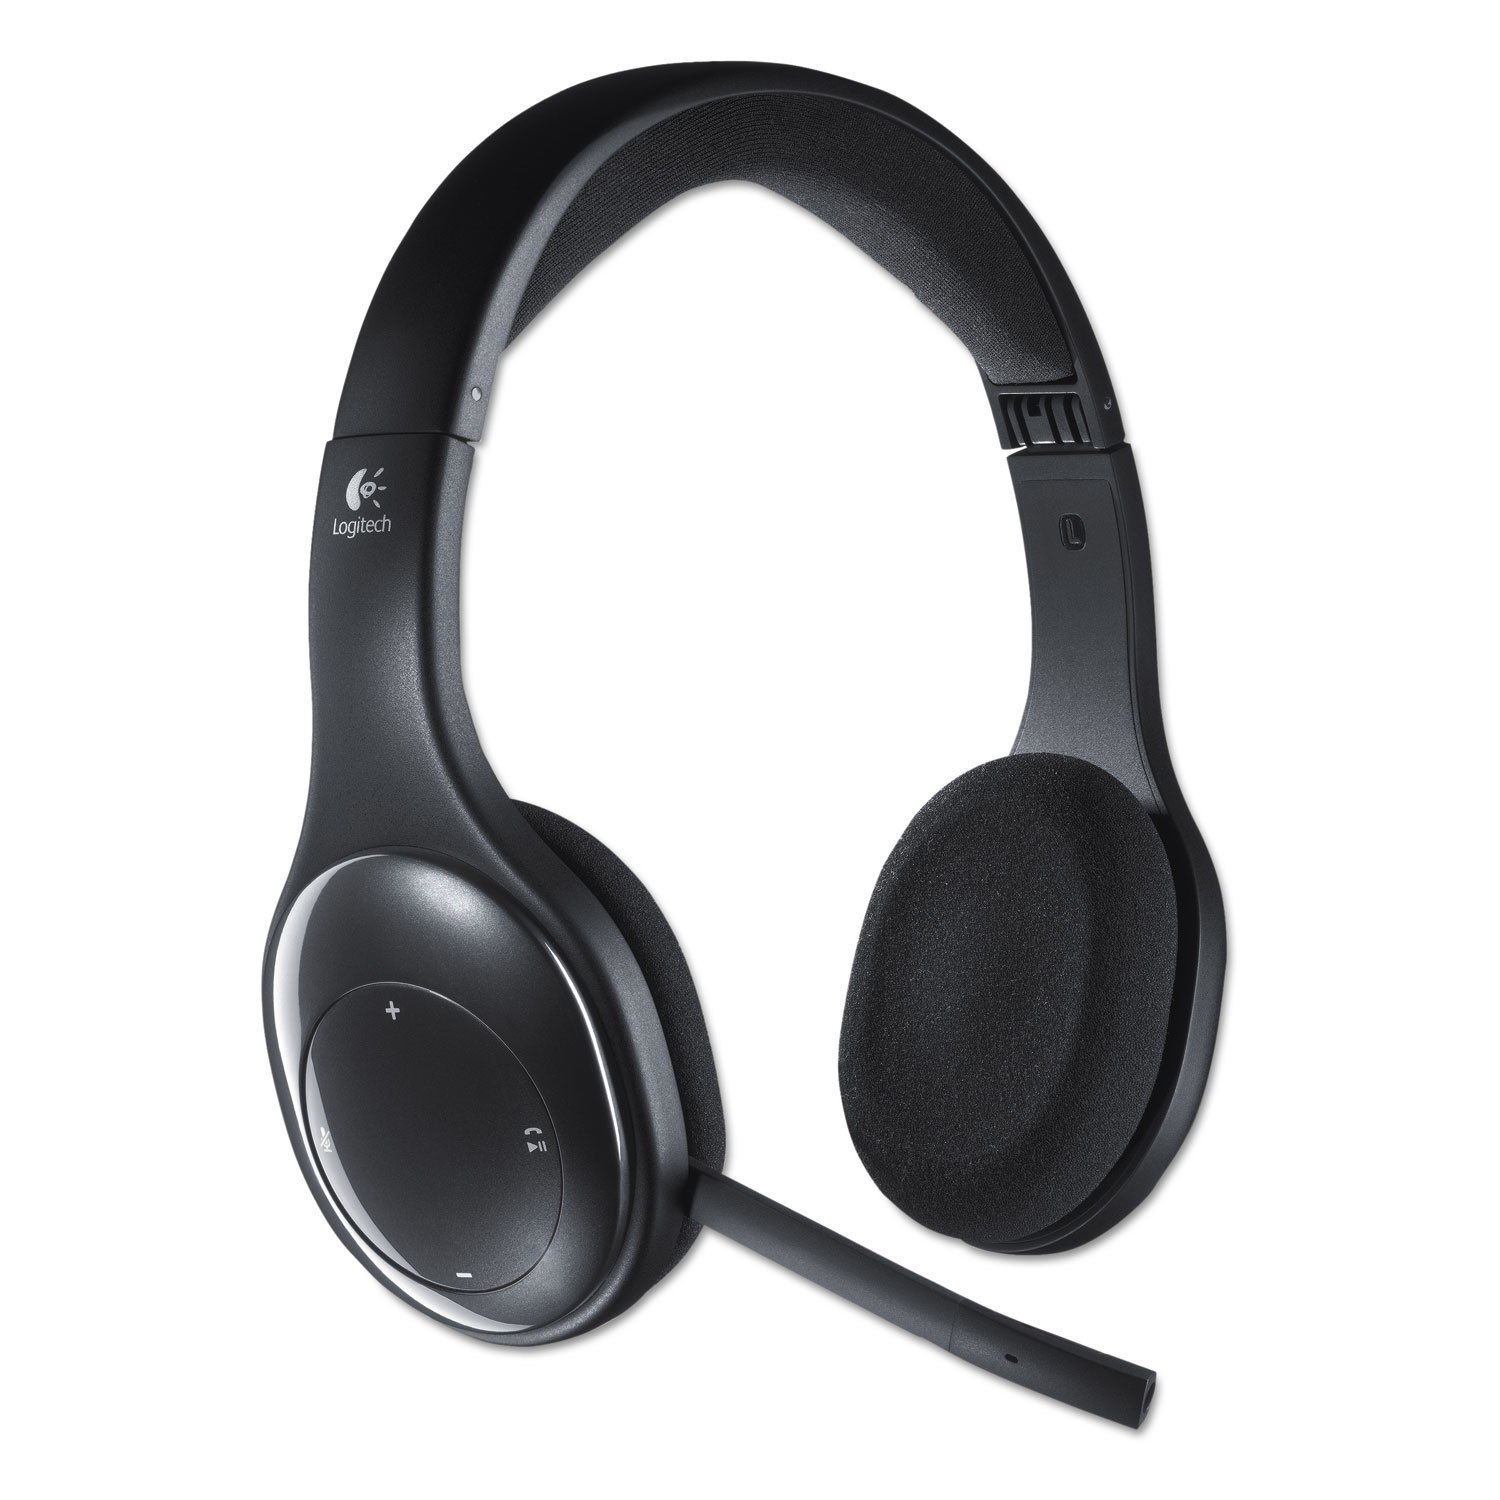  Logitech 981-000337 H800 Binaural Over-the-Head Wireless Bluetooth Headset, 4 ft Range, Black (LOG981000337) 